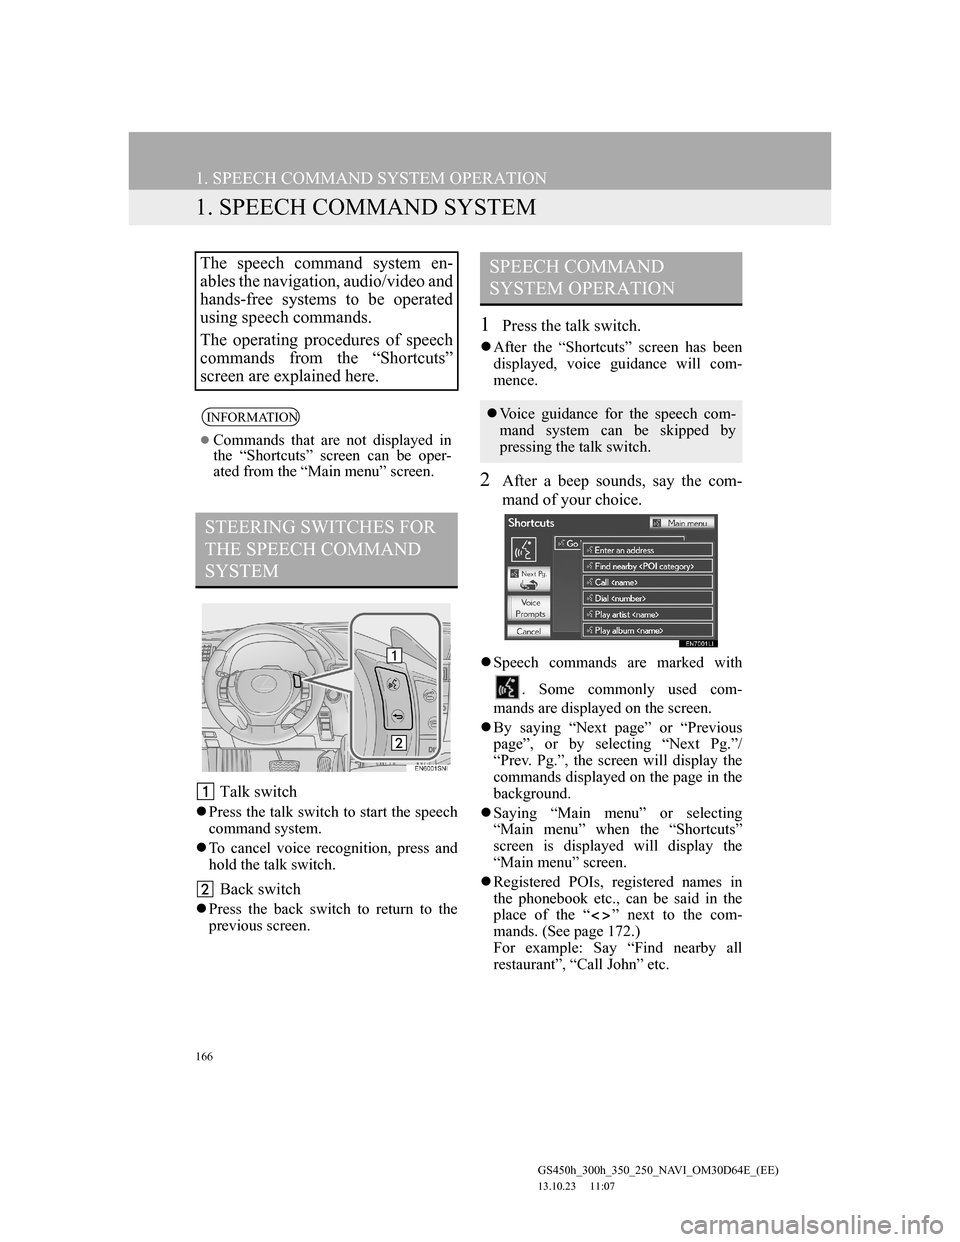 Lexus GS350 2013  Navigation manual 166
GS450h_300h_350_250_NAVI_OM30D64E_(EE)
13.10.23     11:07
1. SPEECH COMMAND SYSTEM OPERATION
1. SPEECH COMMAND SYSTEM
 Talk switch
Press the talk switch to start the speech
command system.
T